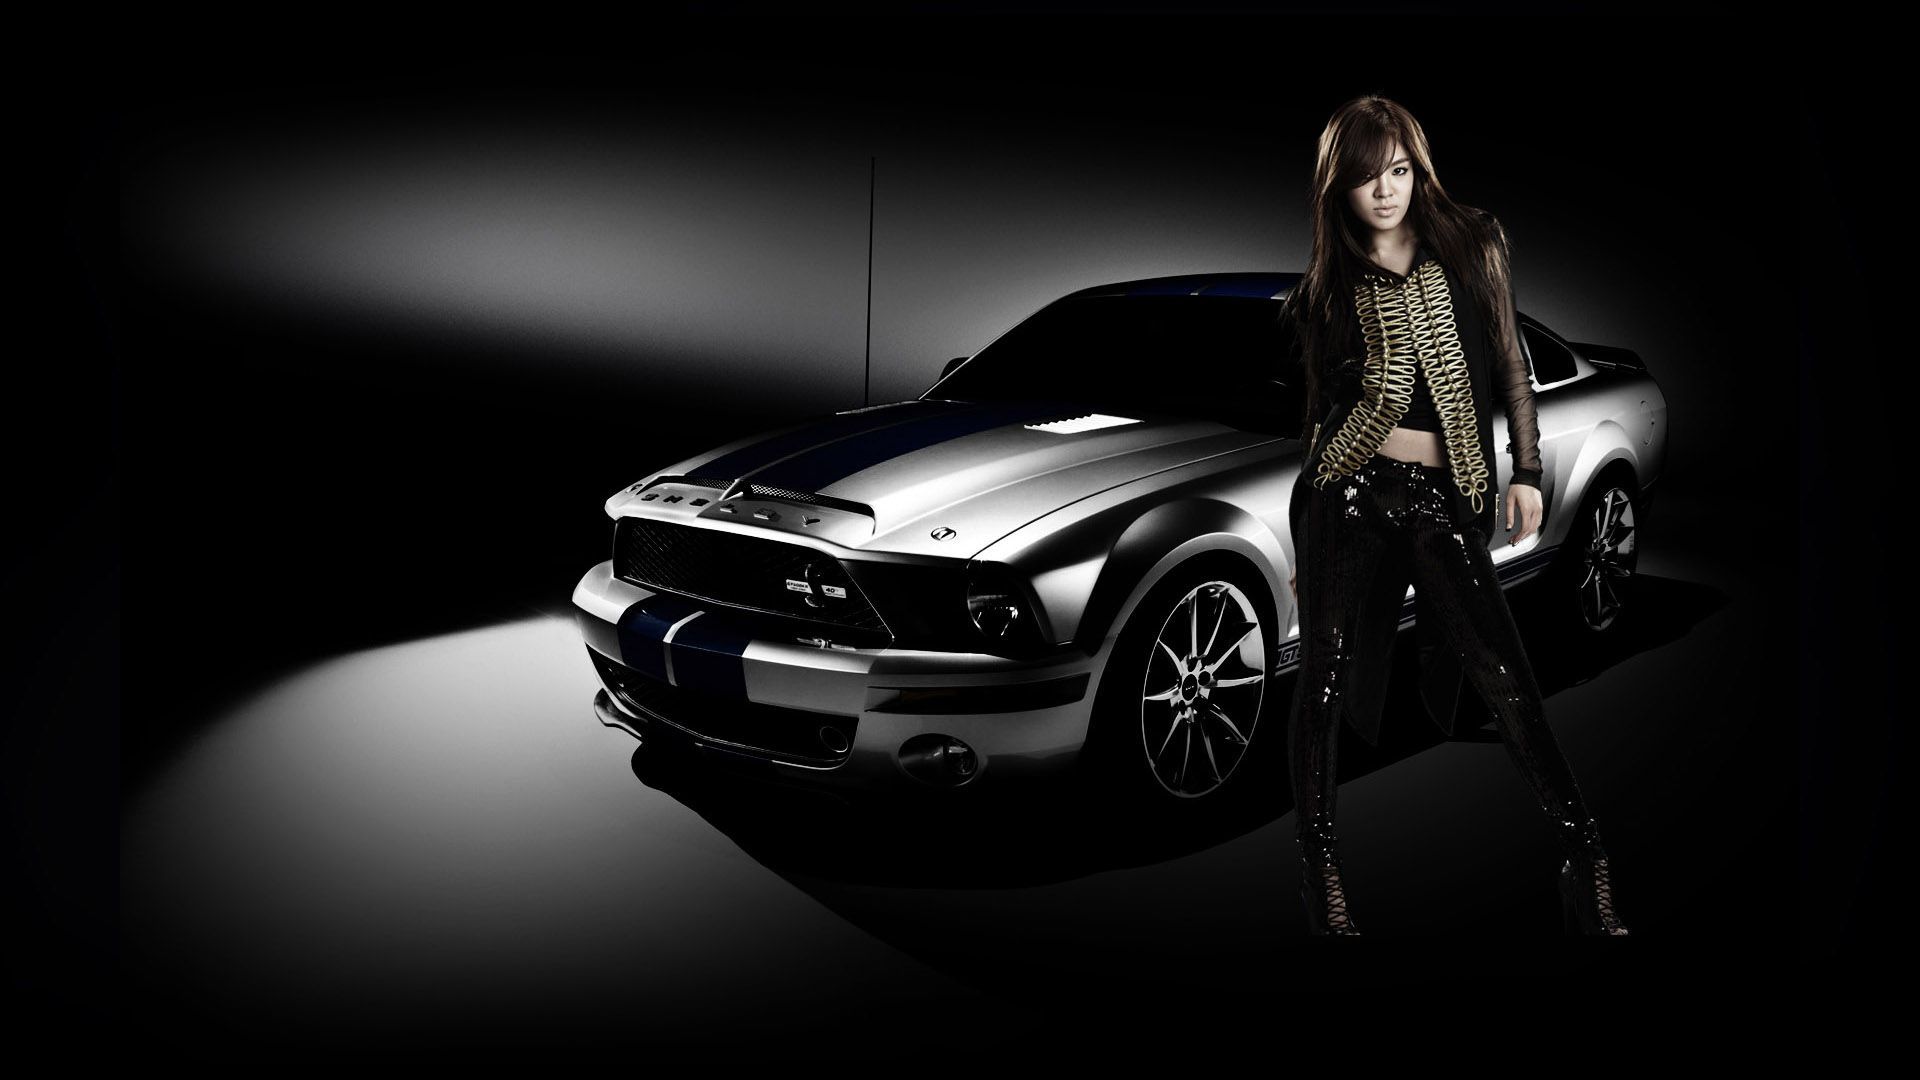 Car And Black Dress Girl Wallpaper. Car and girl wallpaper, Mustang, Ford mustang wallpaper